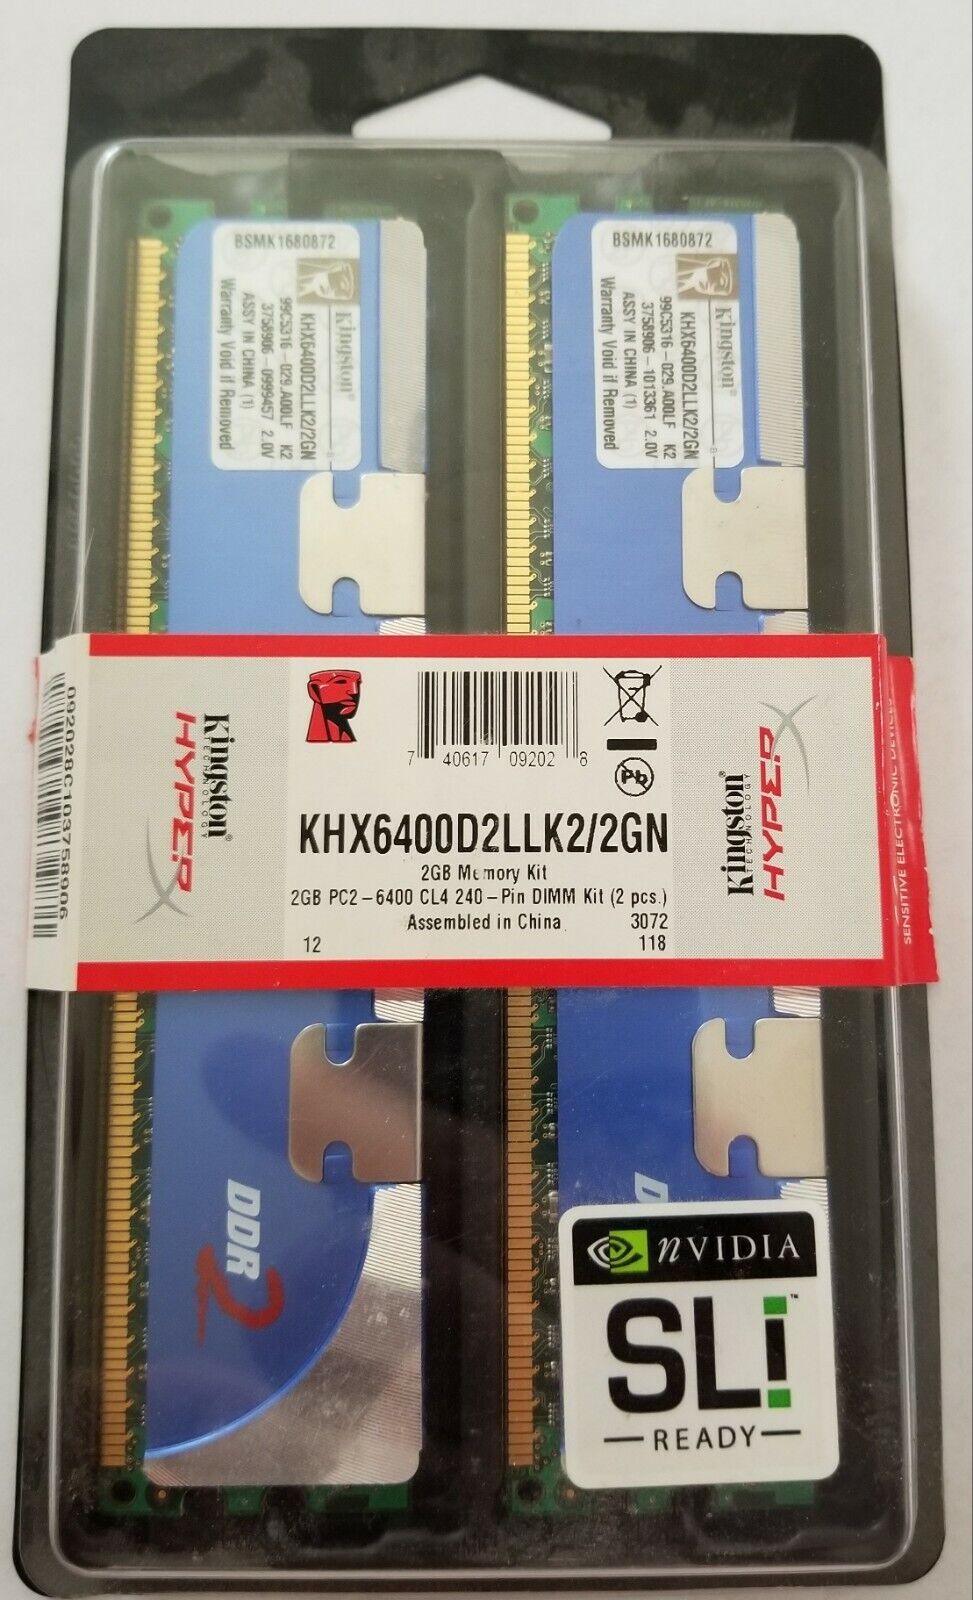 Kingston HyperX 1GB DIMM 800 MHz DDR2 SDRAM Memory (KHX6400D2LLK2/2GN)